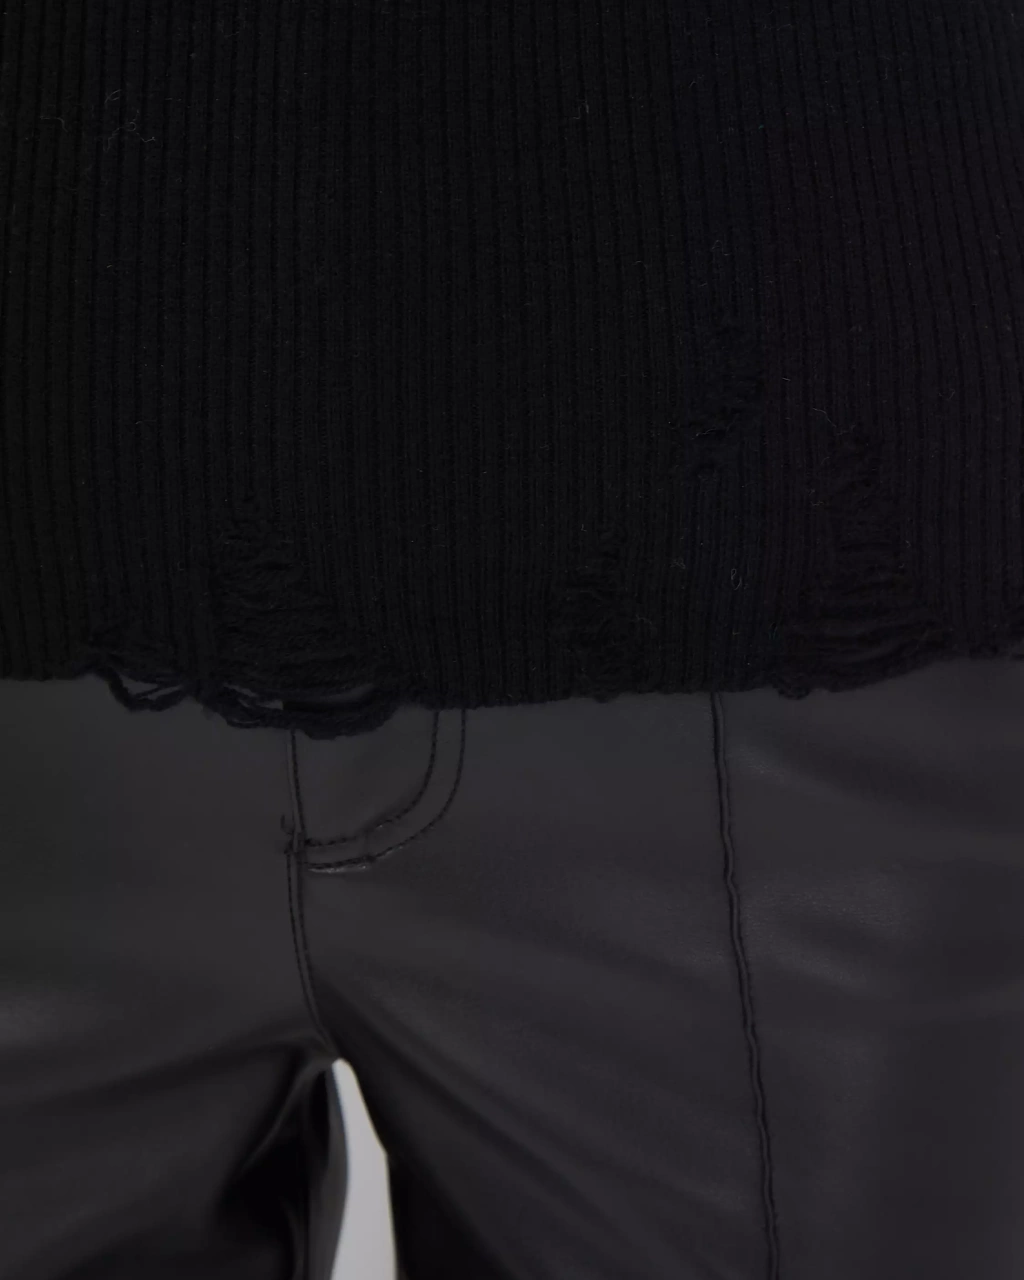 Black merino wool turtleneck with a hood